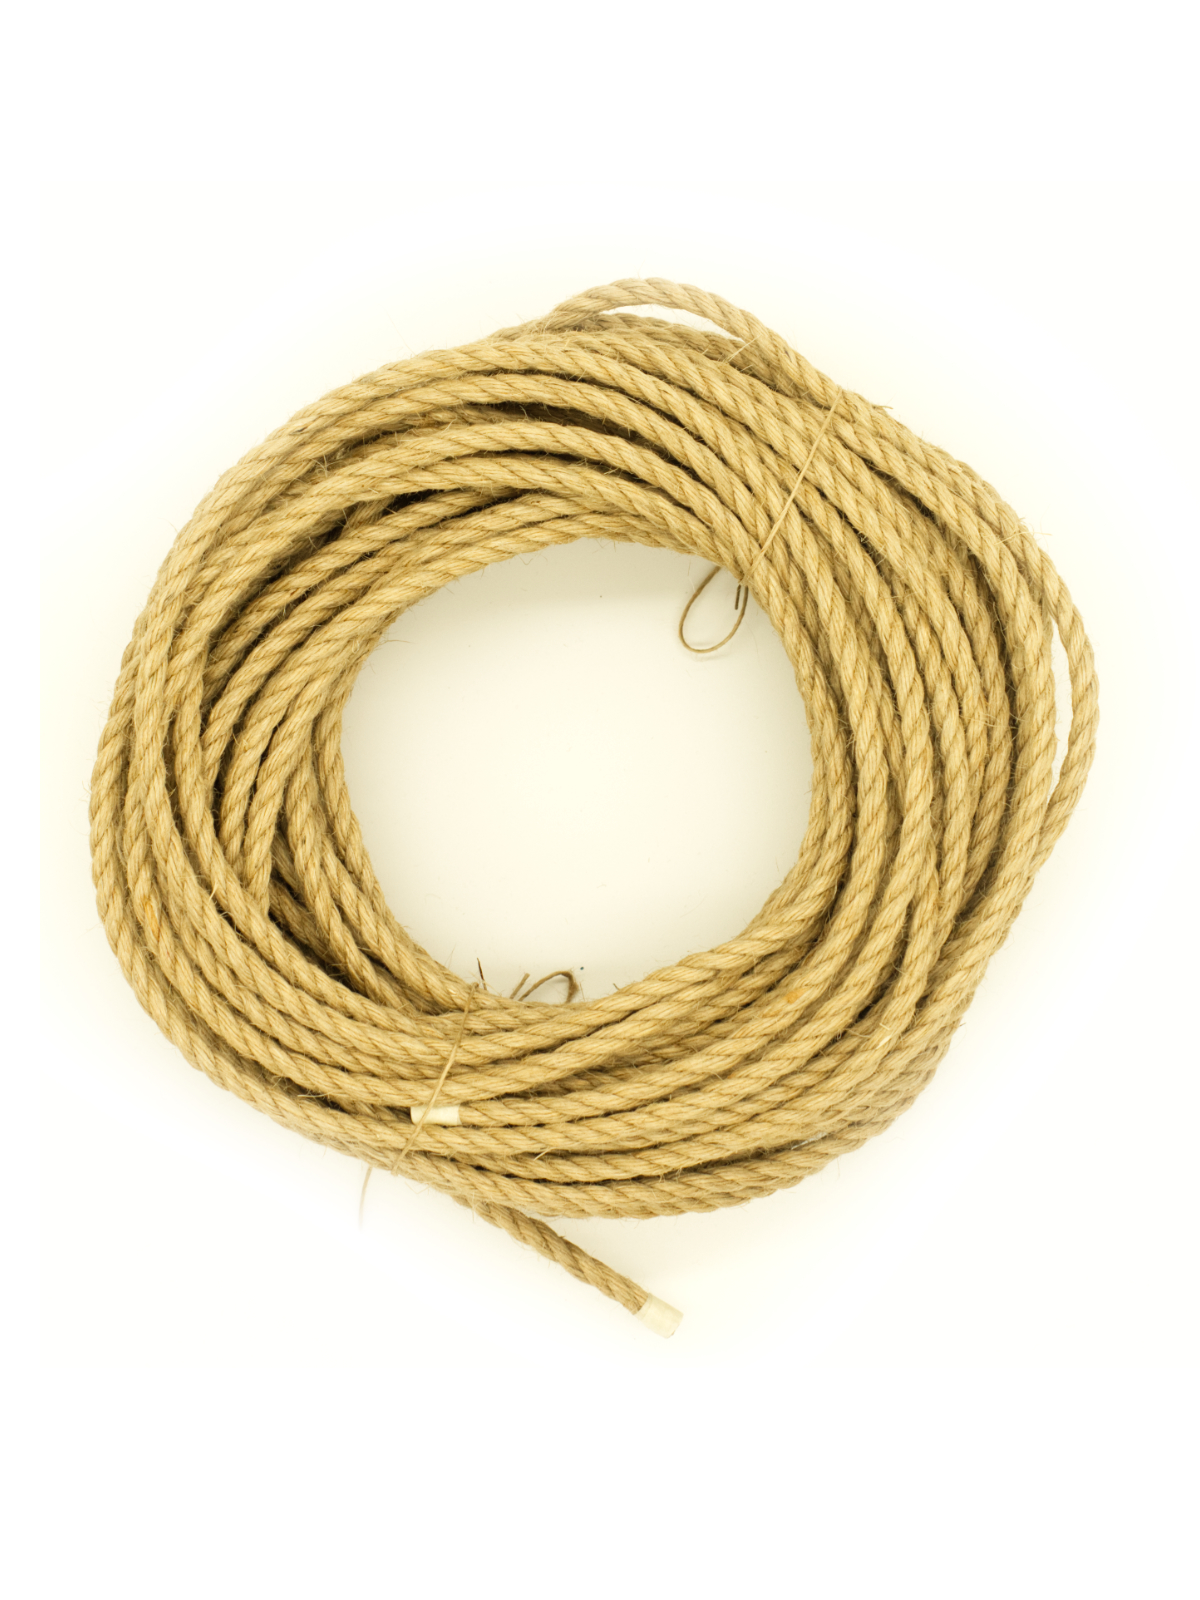 25m, ∅ 6mm raw jute rope, AMATSUNAWA 33, JBO-free, for DIY processing